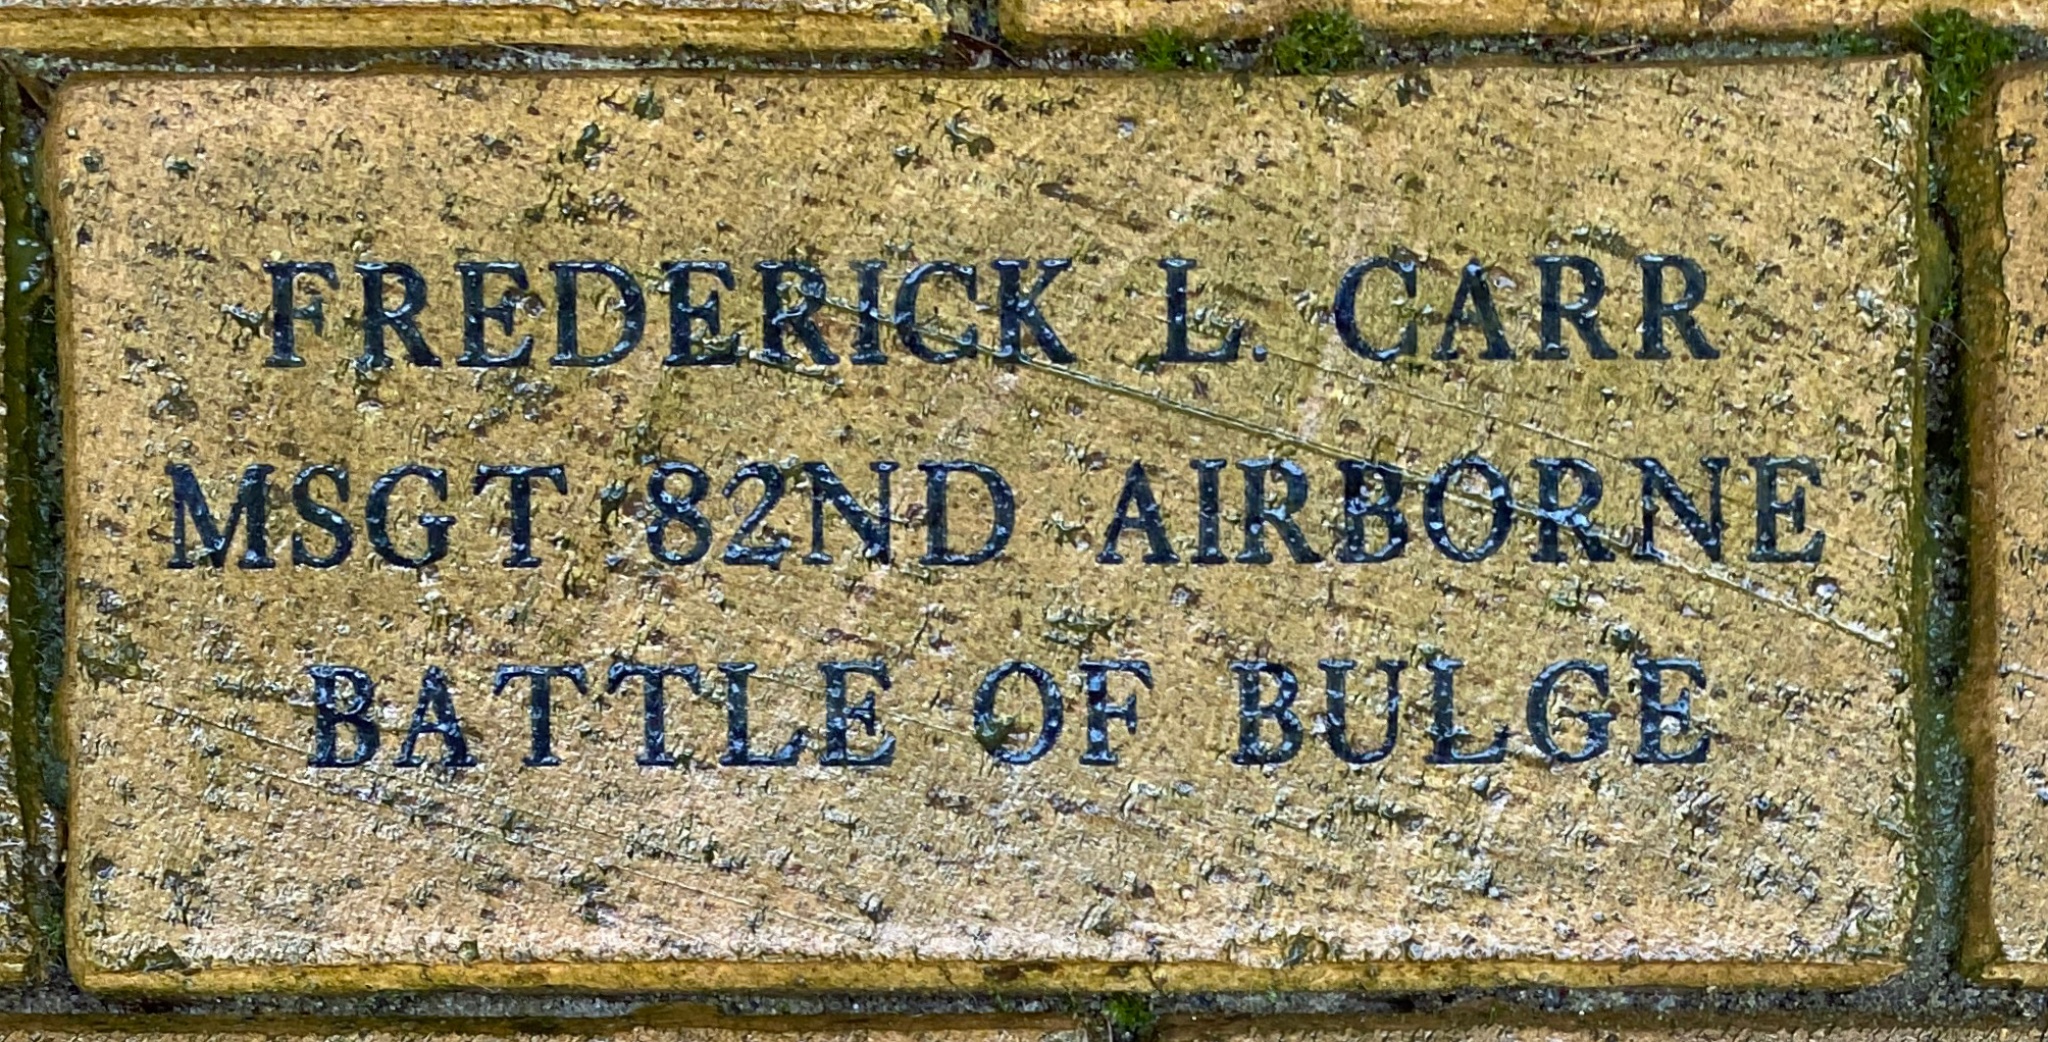 FREDERICK L. CARR MSGT 82ND AIRBORNE BATTLE OF BULGE